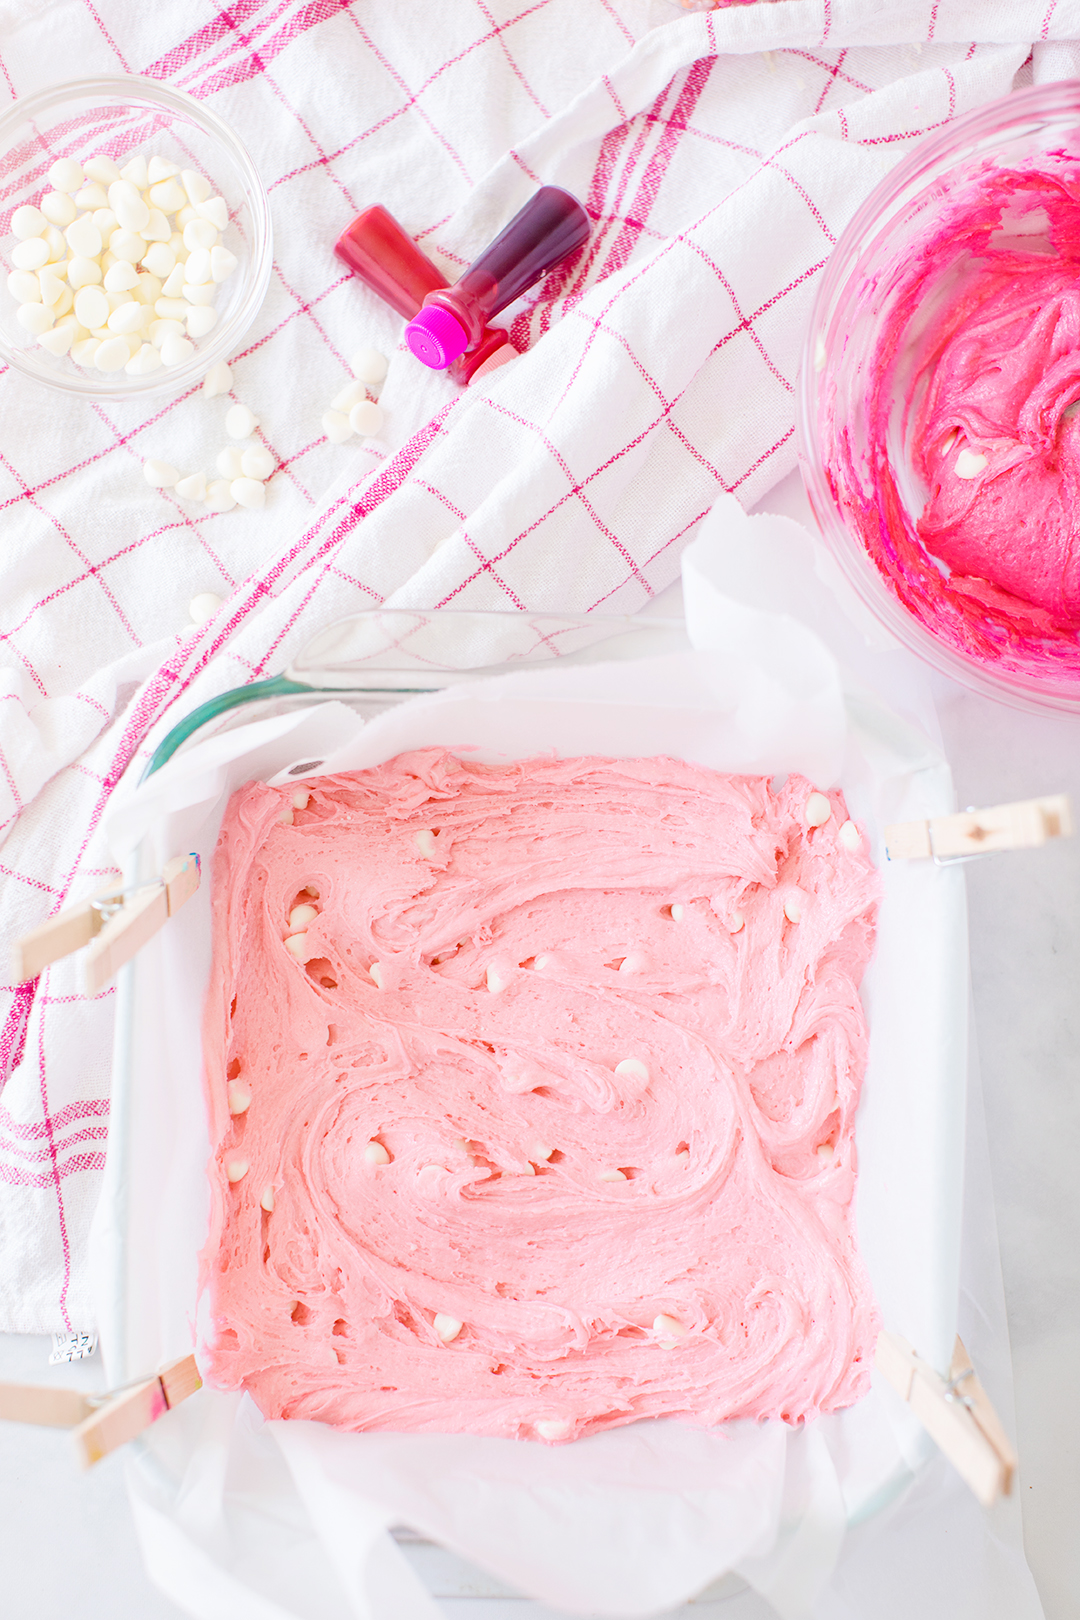 pink blondie batter in baking dish